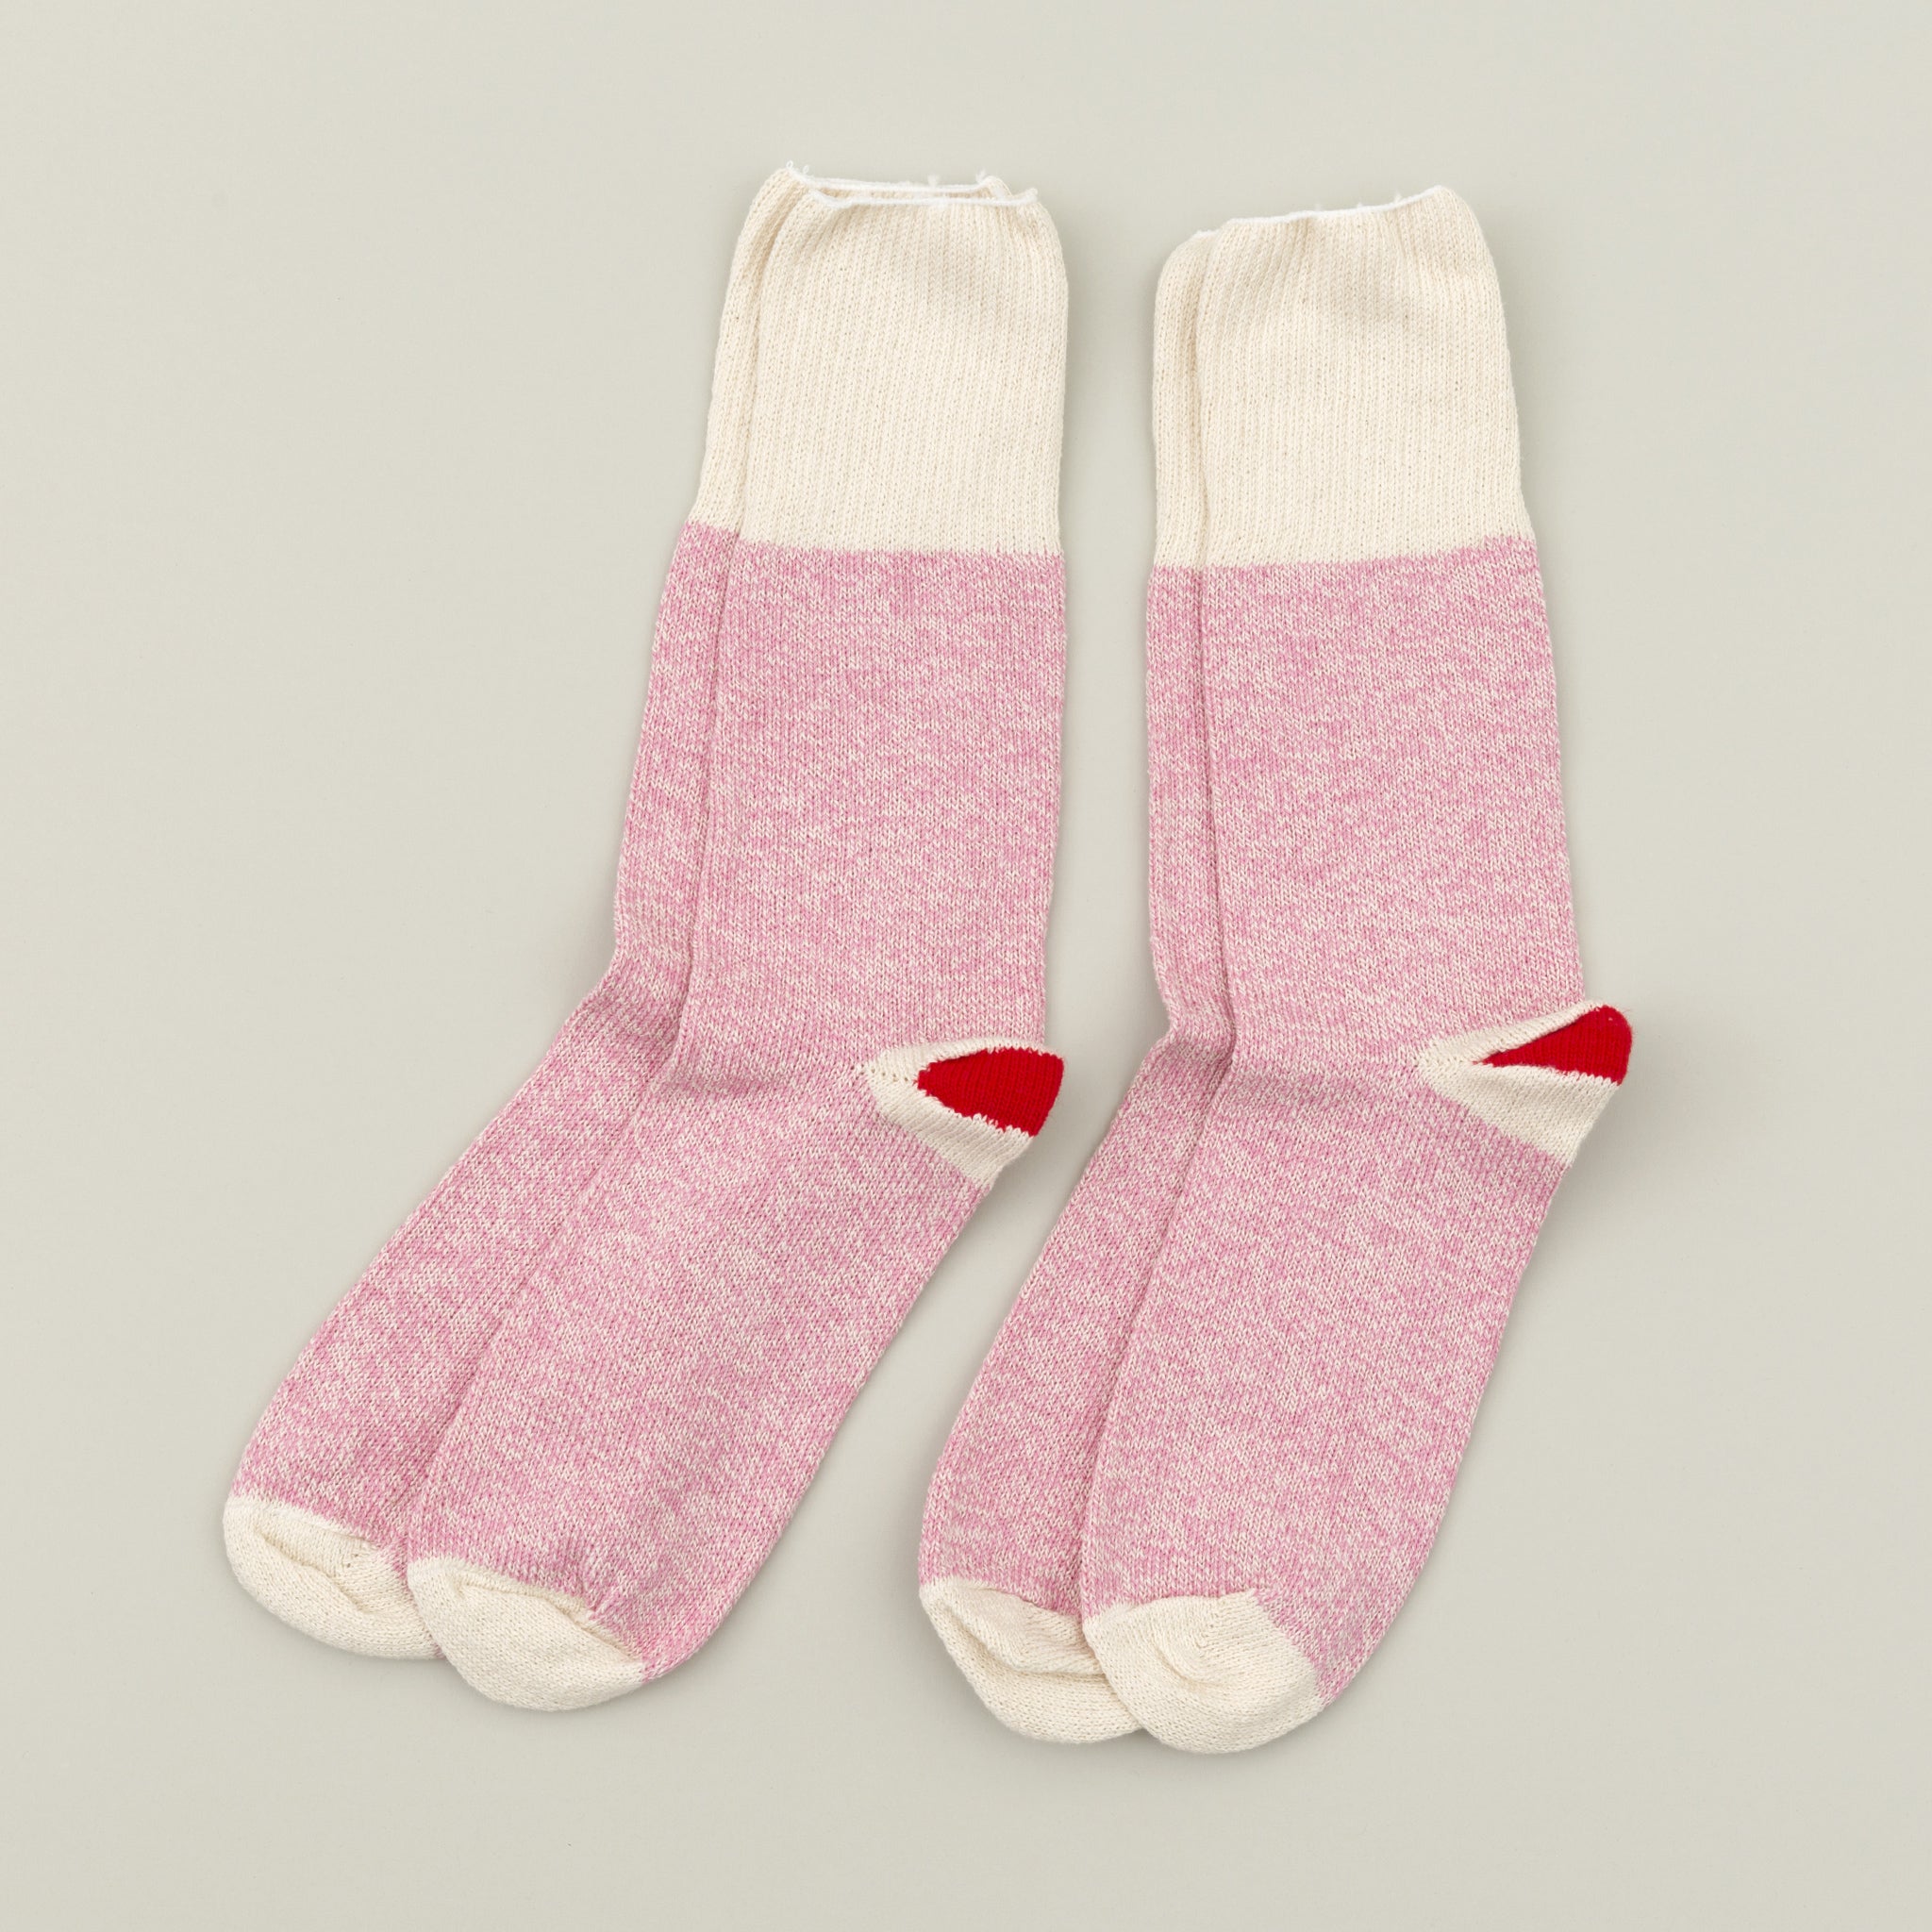 Rockford Red Heel Socks, Pink - The 